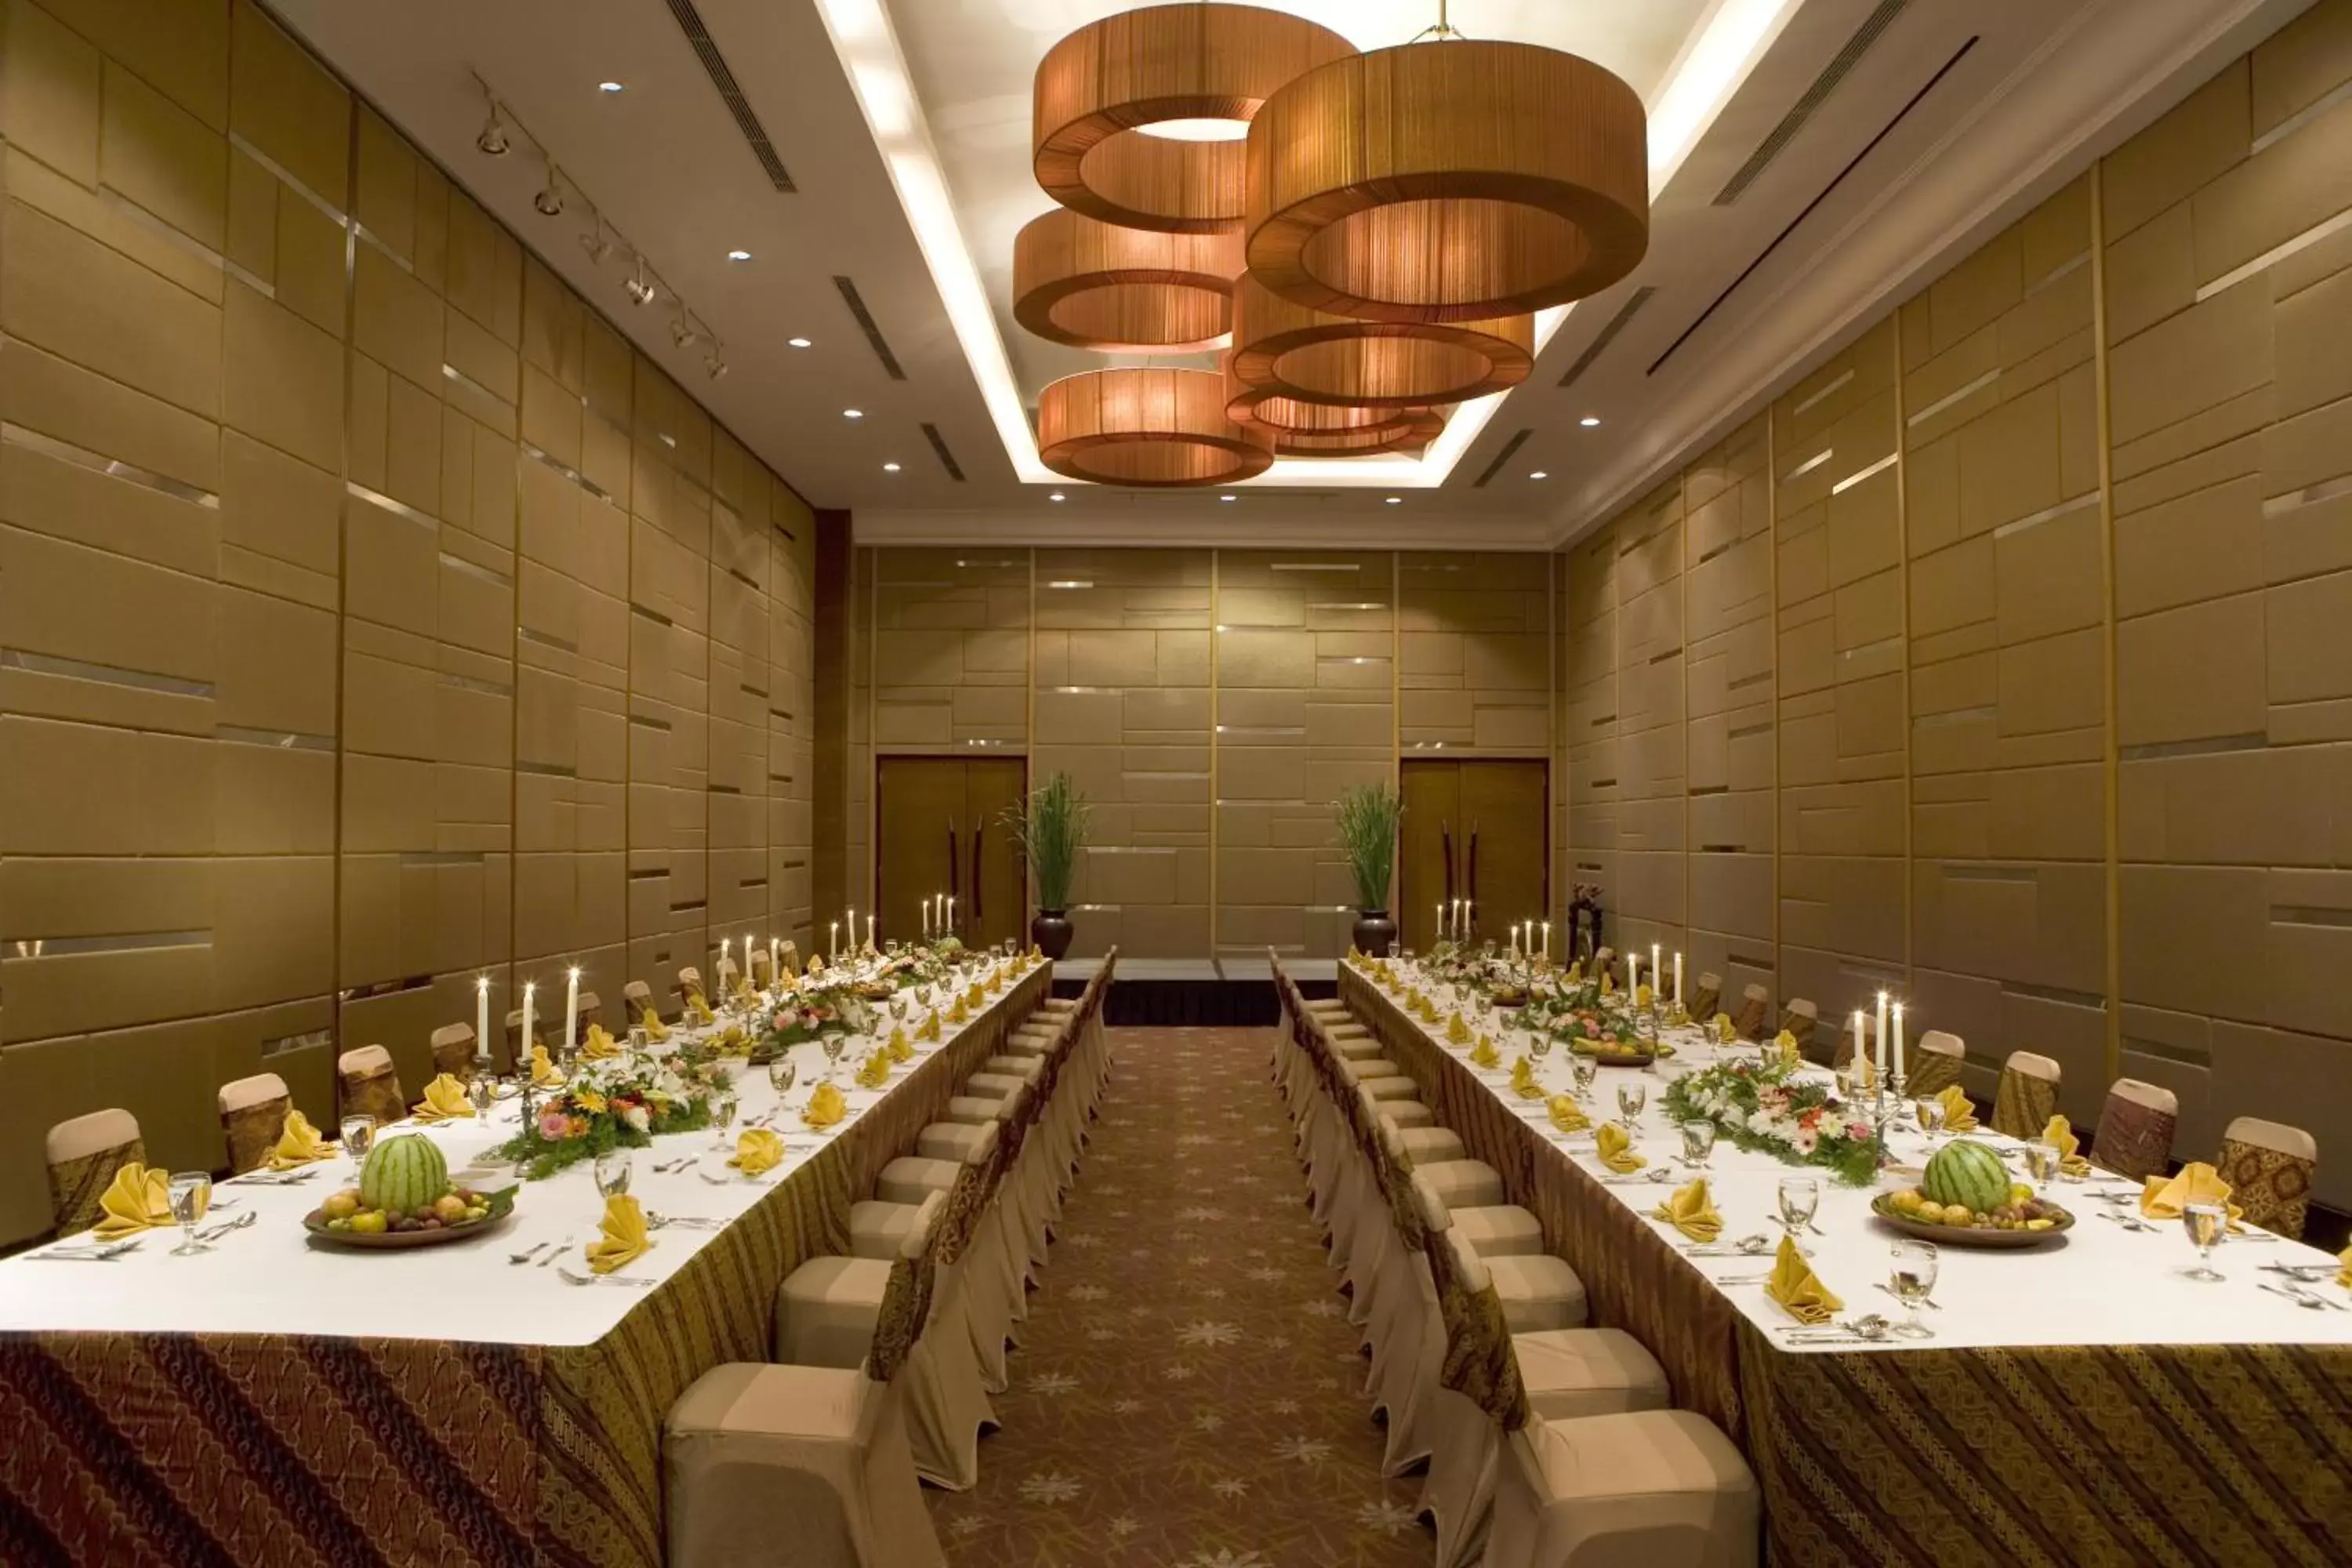 Banquet/Function facilities, Banquet Facilities in Hotel Santika Premiere Slipi Jakarta